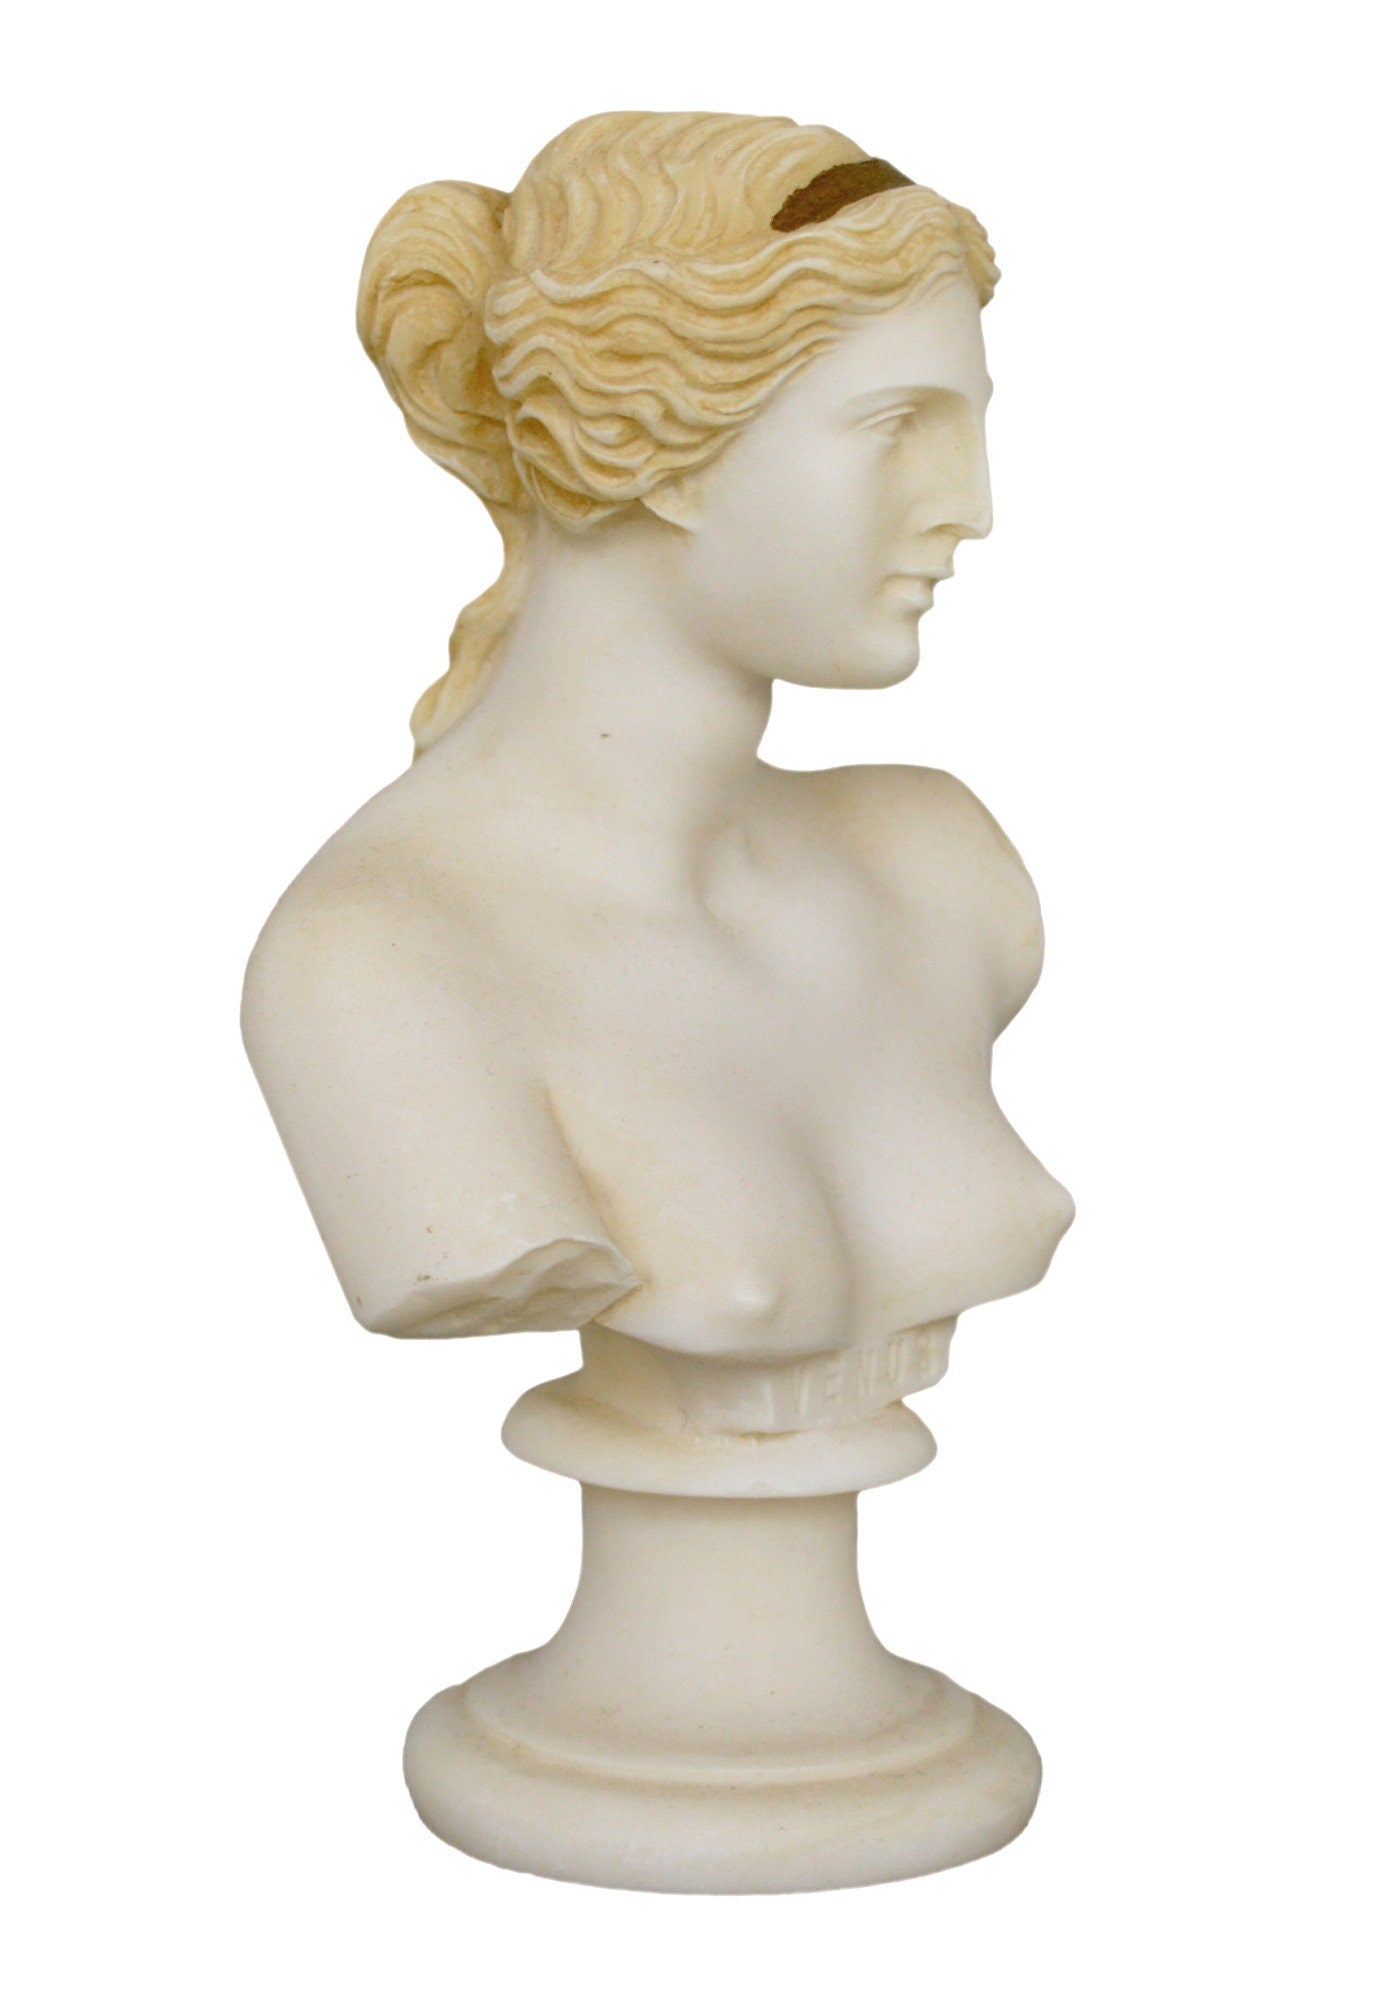 Aphrodite Venus Bust - Greek Roman Goddess of Love, Beauty, Sexual Pleasure, Fertility - Aged Alabaster Statue